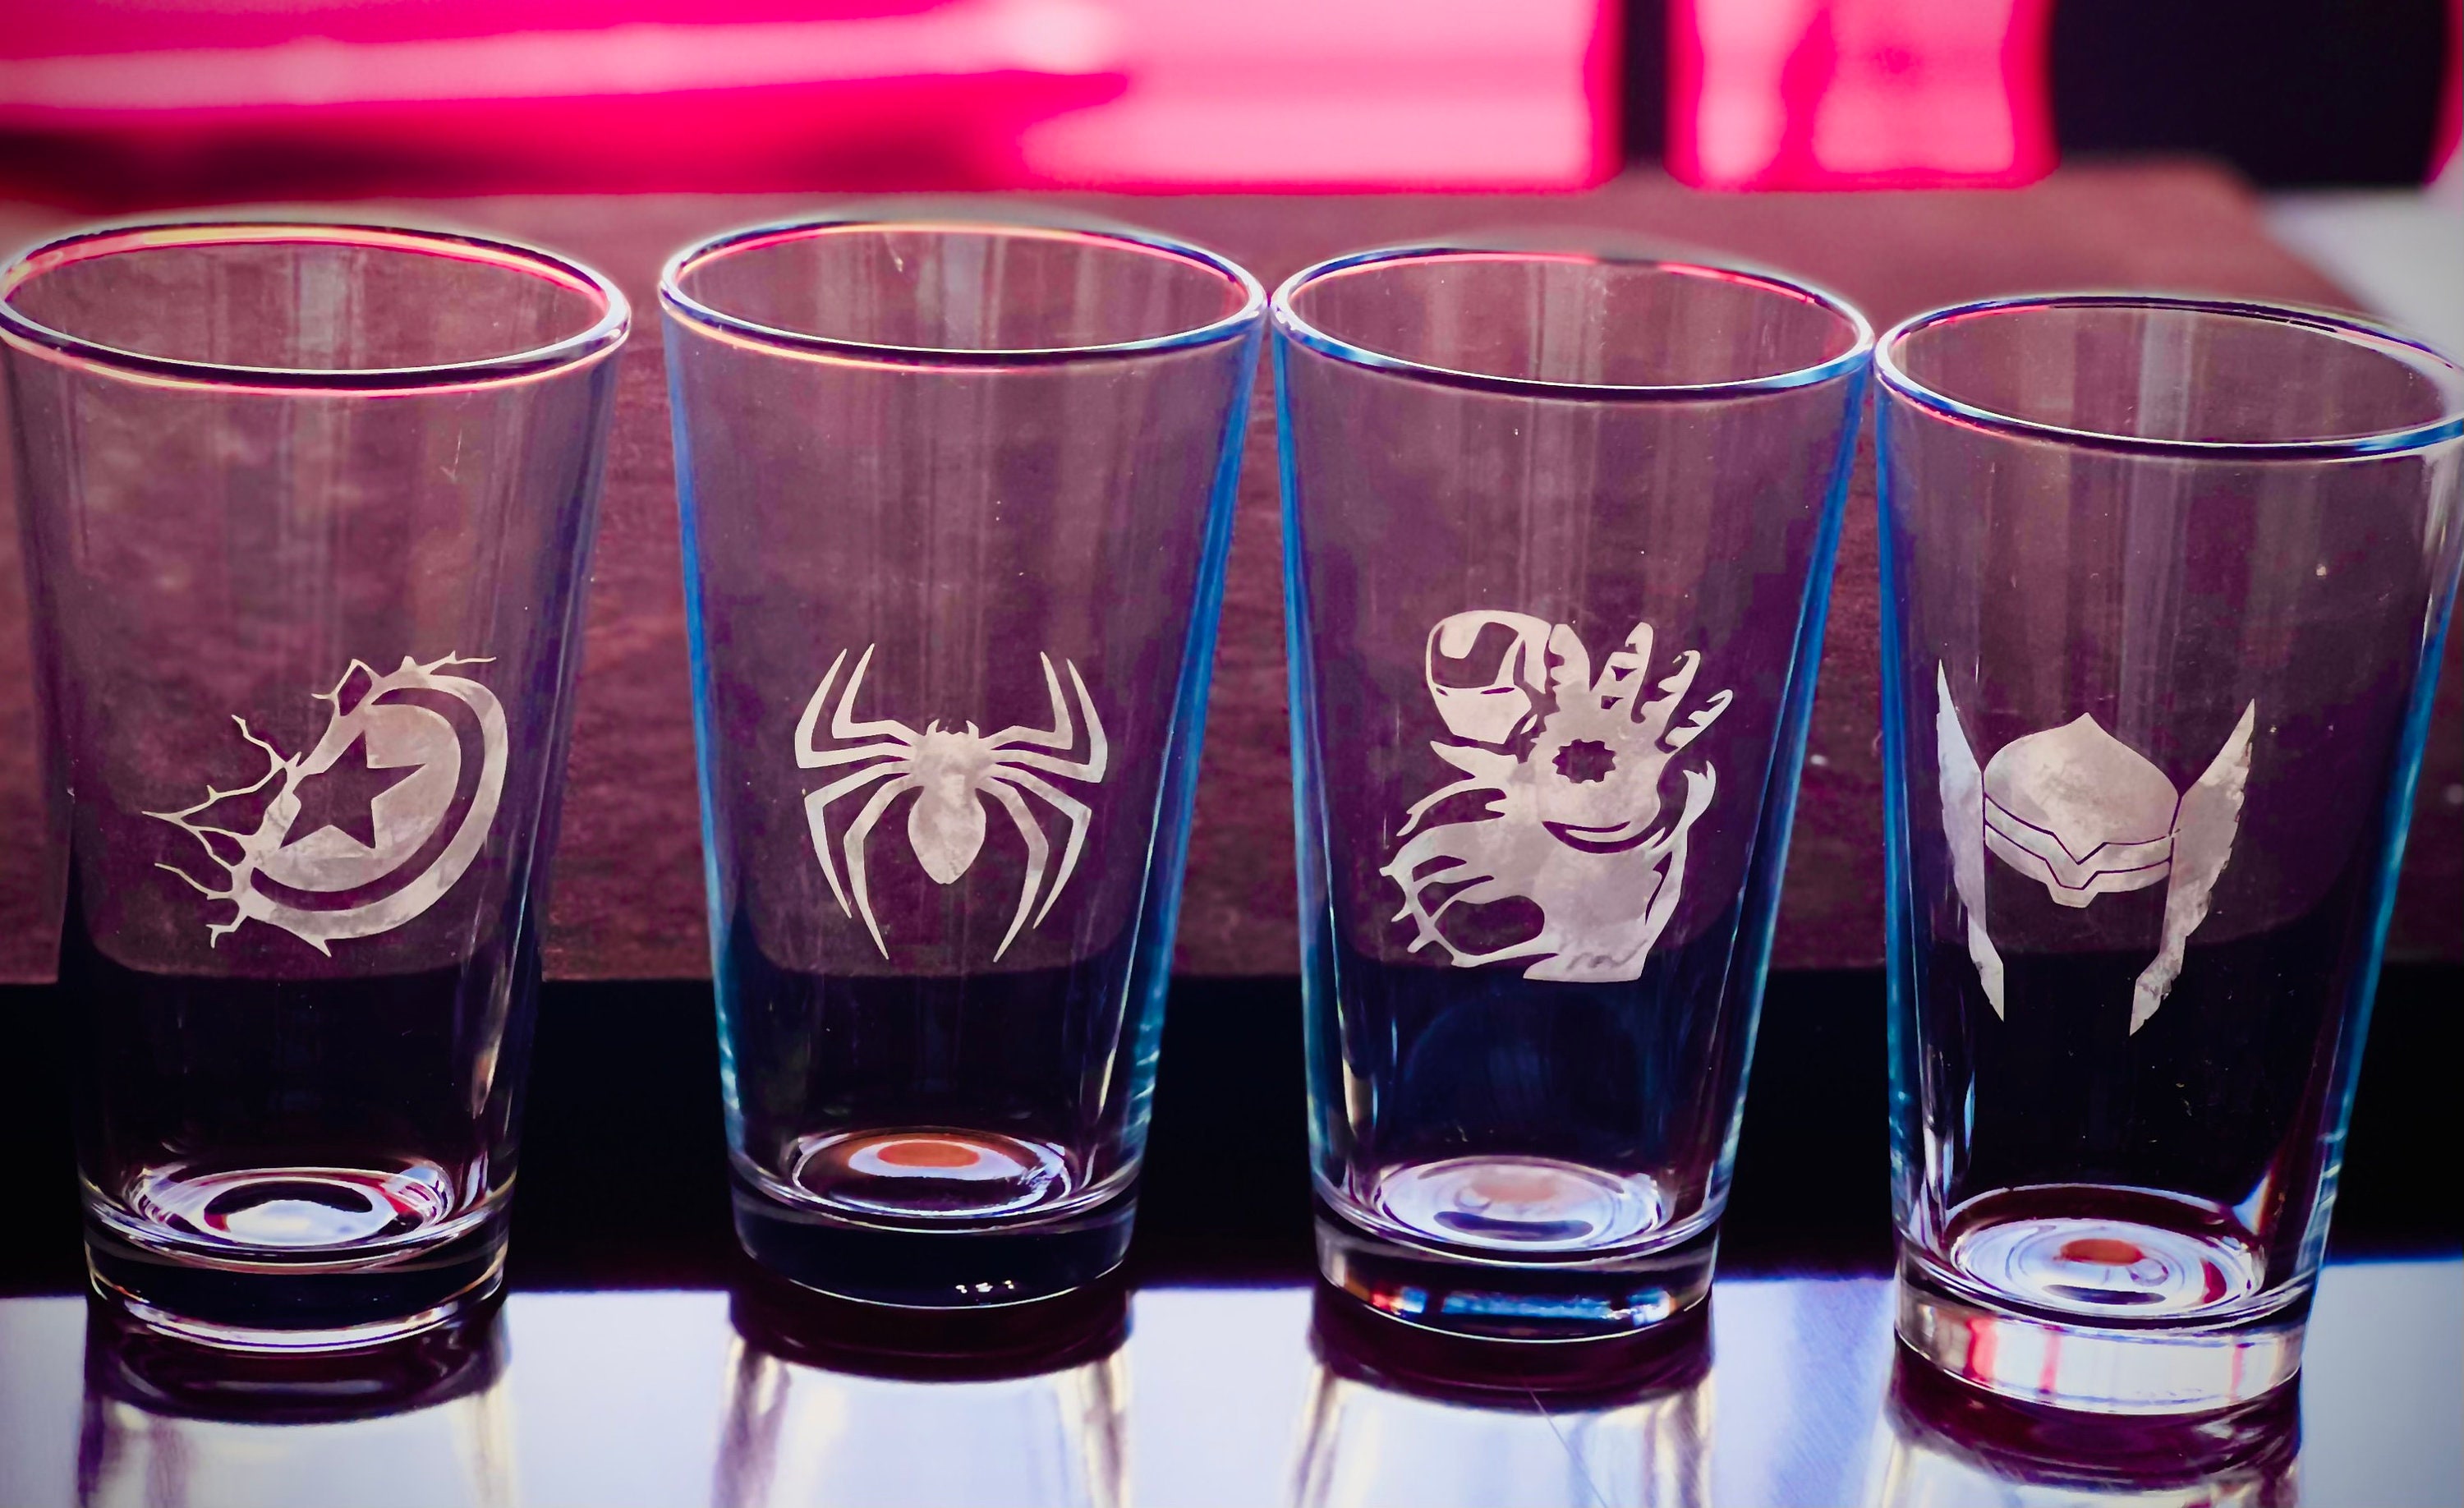 Avengers Pint Glass Set - 16 oz. Glass Capacity - Set of 4 Glasses -  Classic Shape